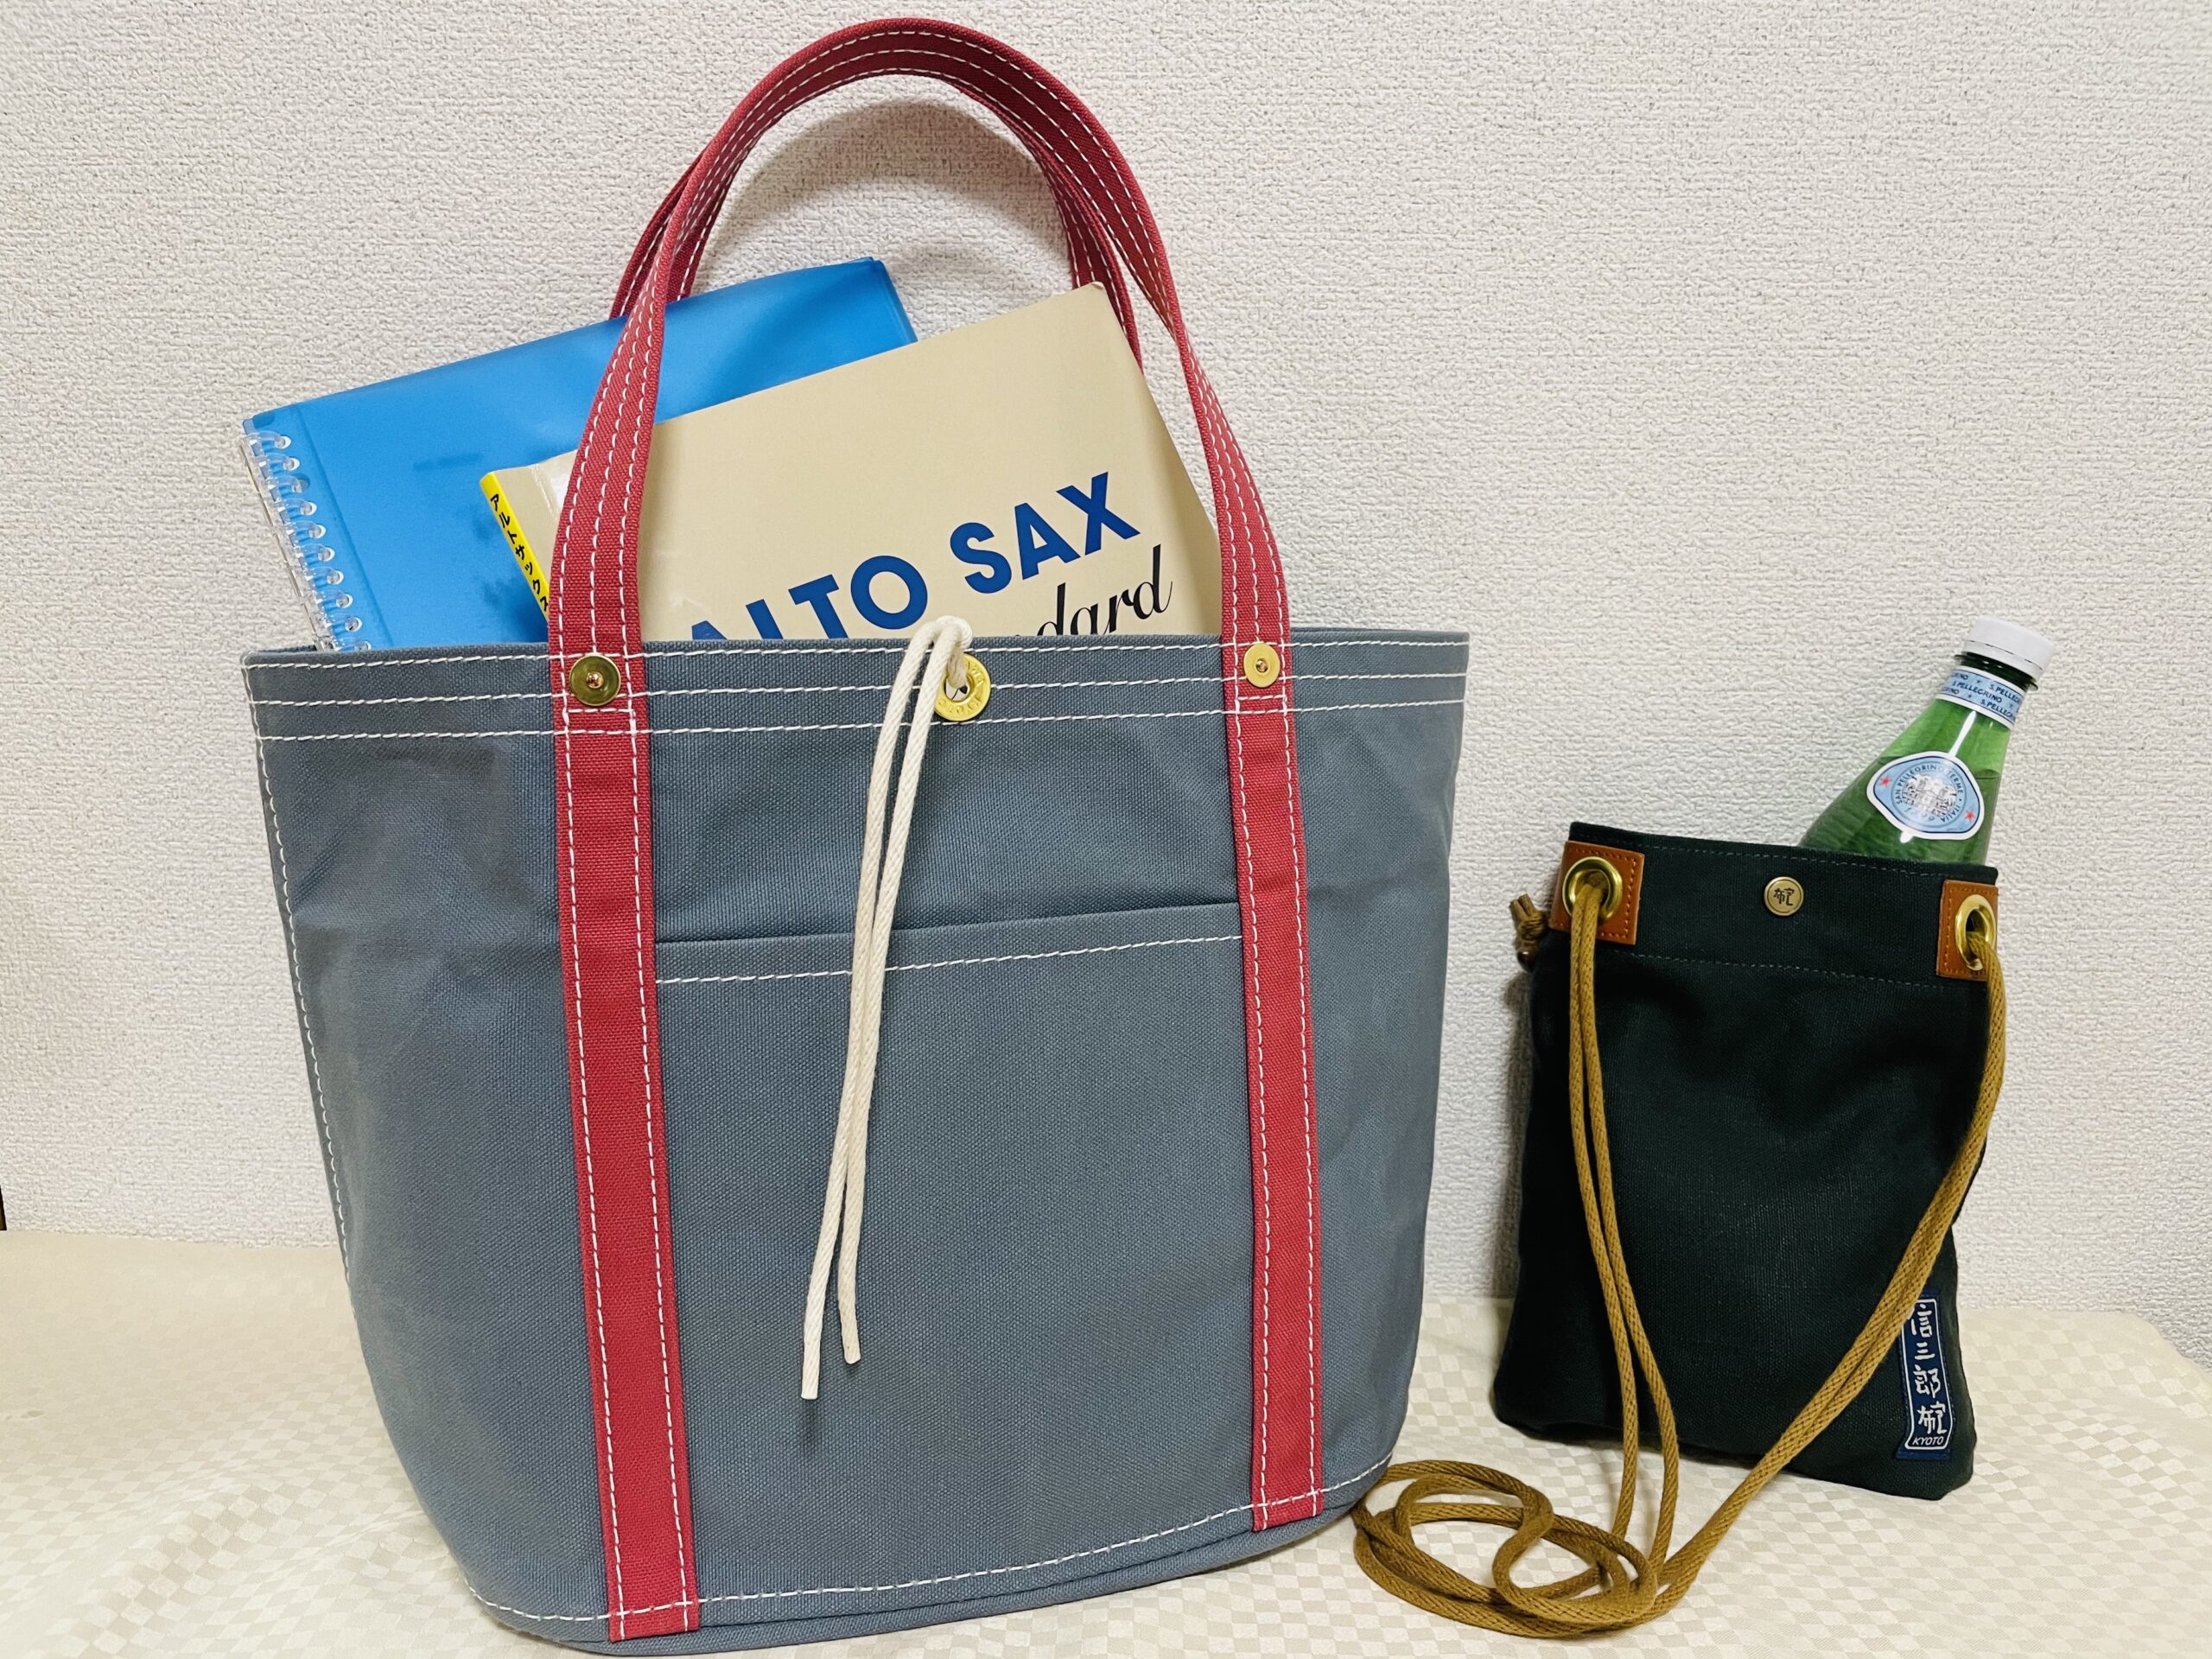 ICHIZAWA SHINZABURO HANPU bags step to abroad online sales. | BLUE SELECT